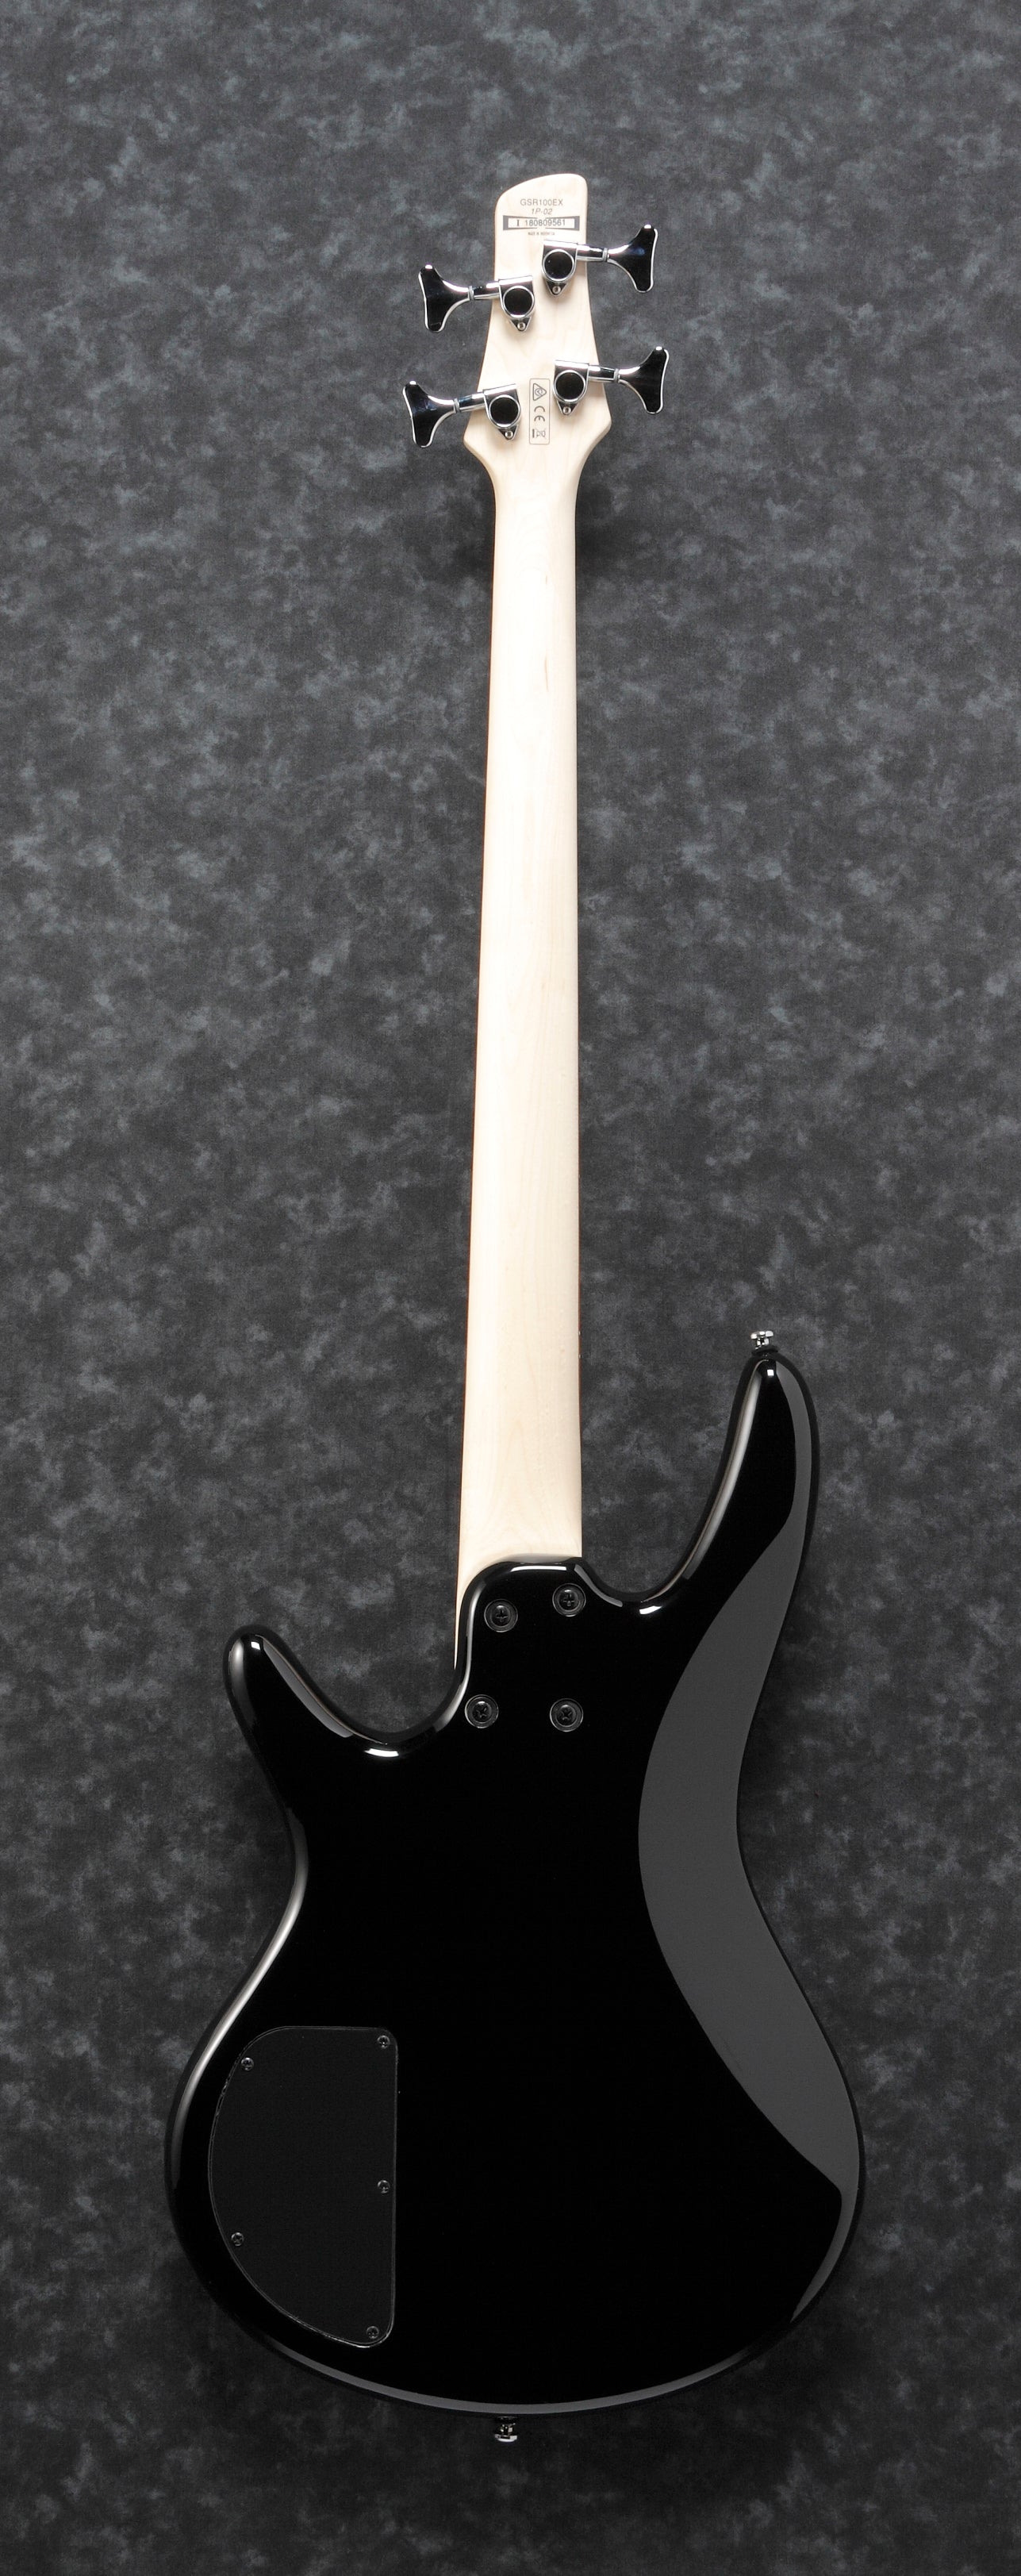 GSR100EX 4 String Bass Guitar - Black